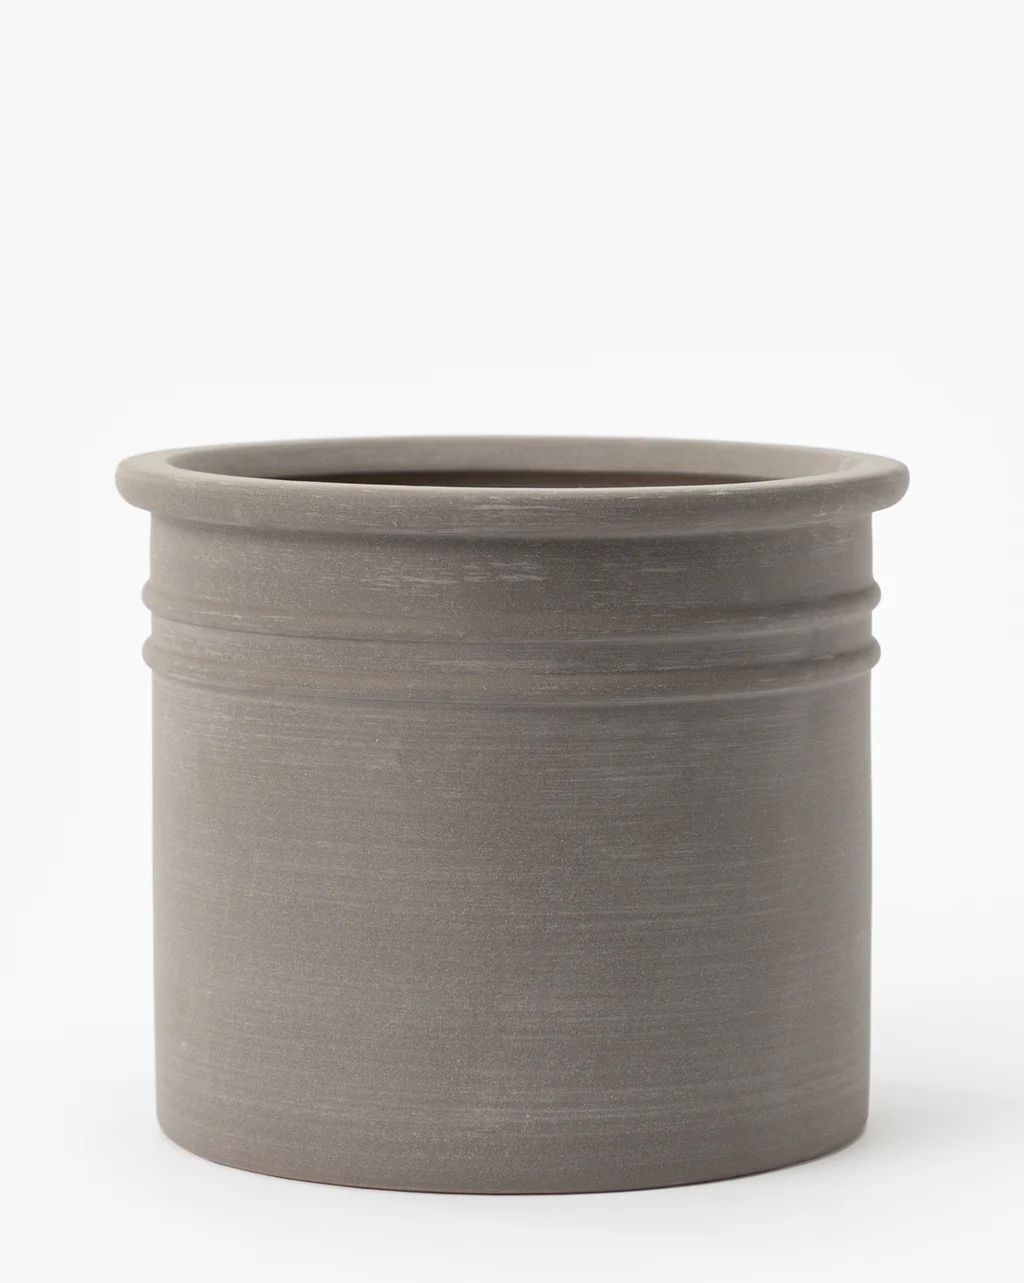 Bolton Ceramic Planter | McGee & Co. (US)